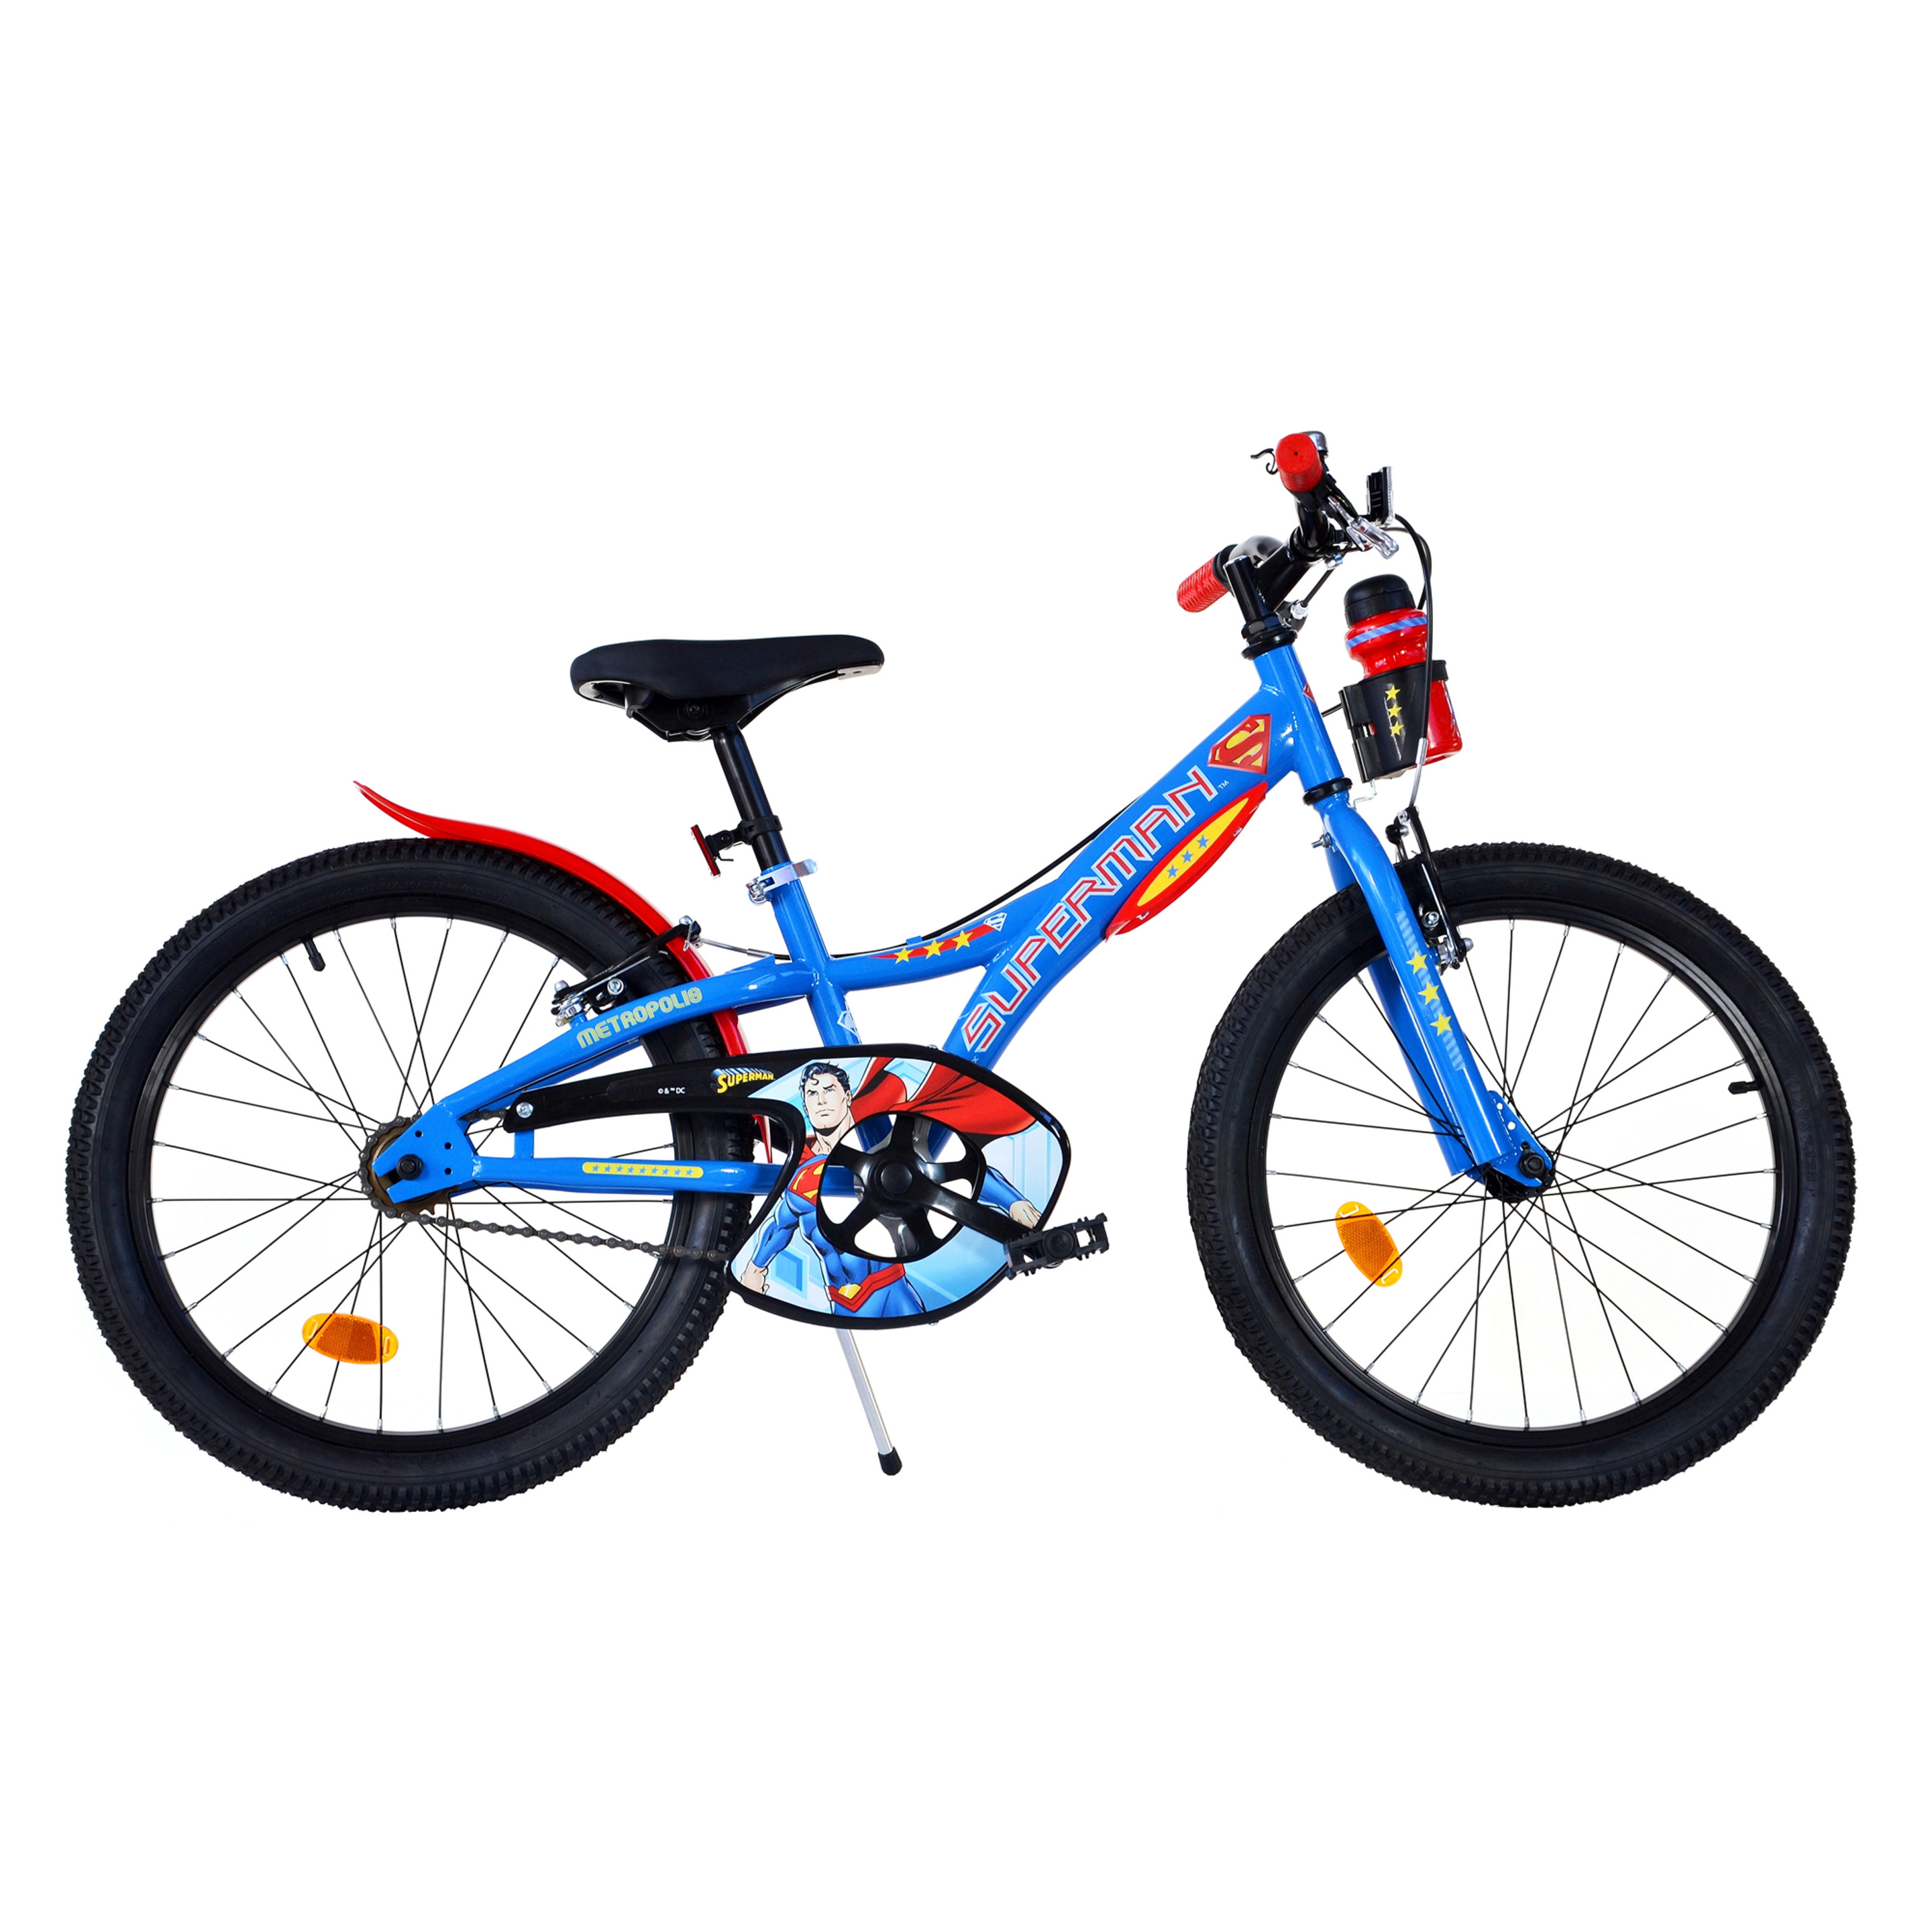 Bicicleta Infantil Superman 20 Pulgadas +7 Años - azul - 